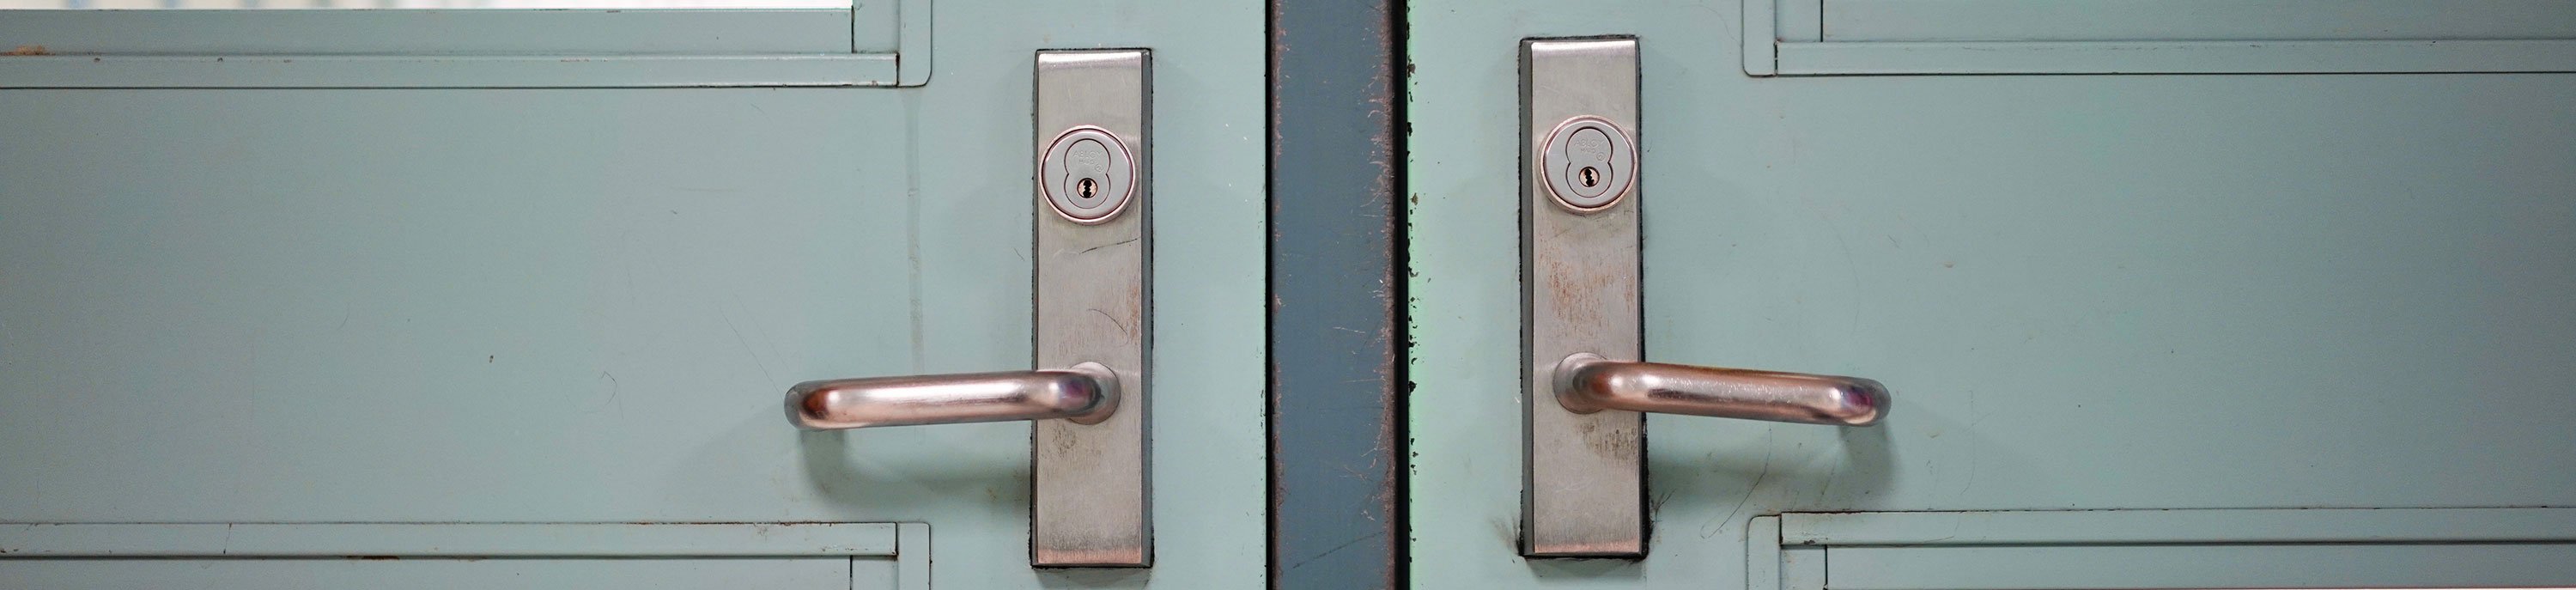 Locked doors at a high school